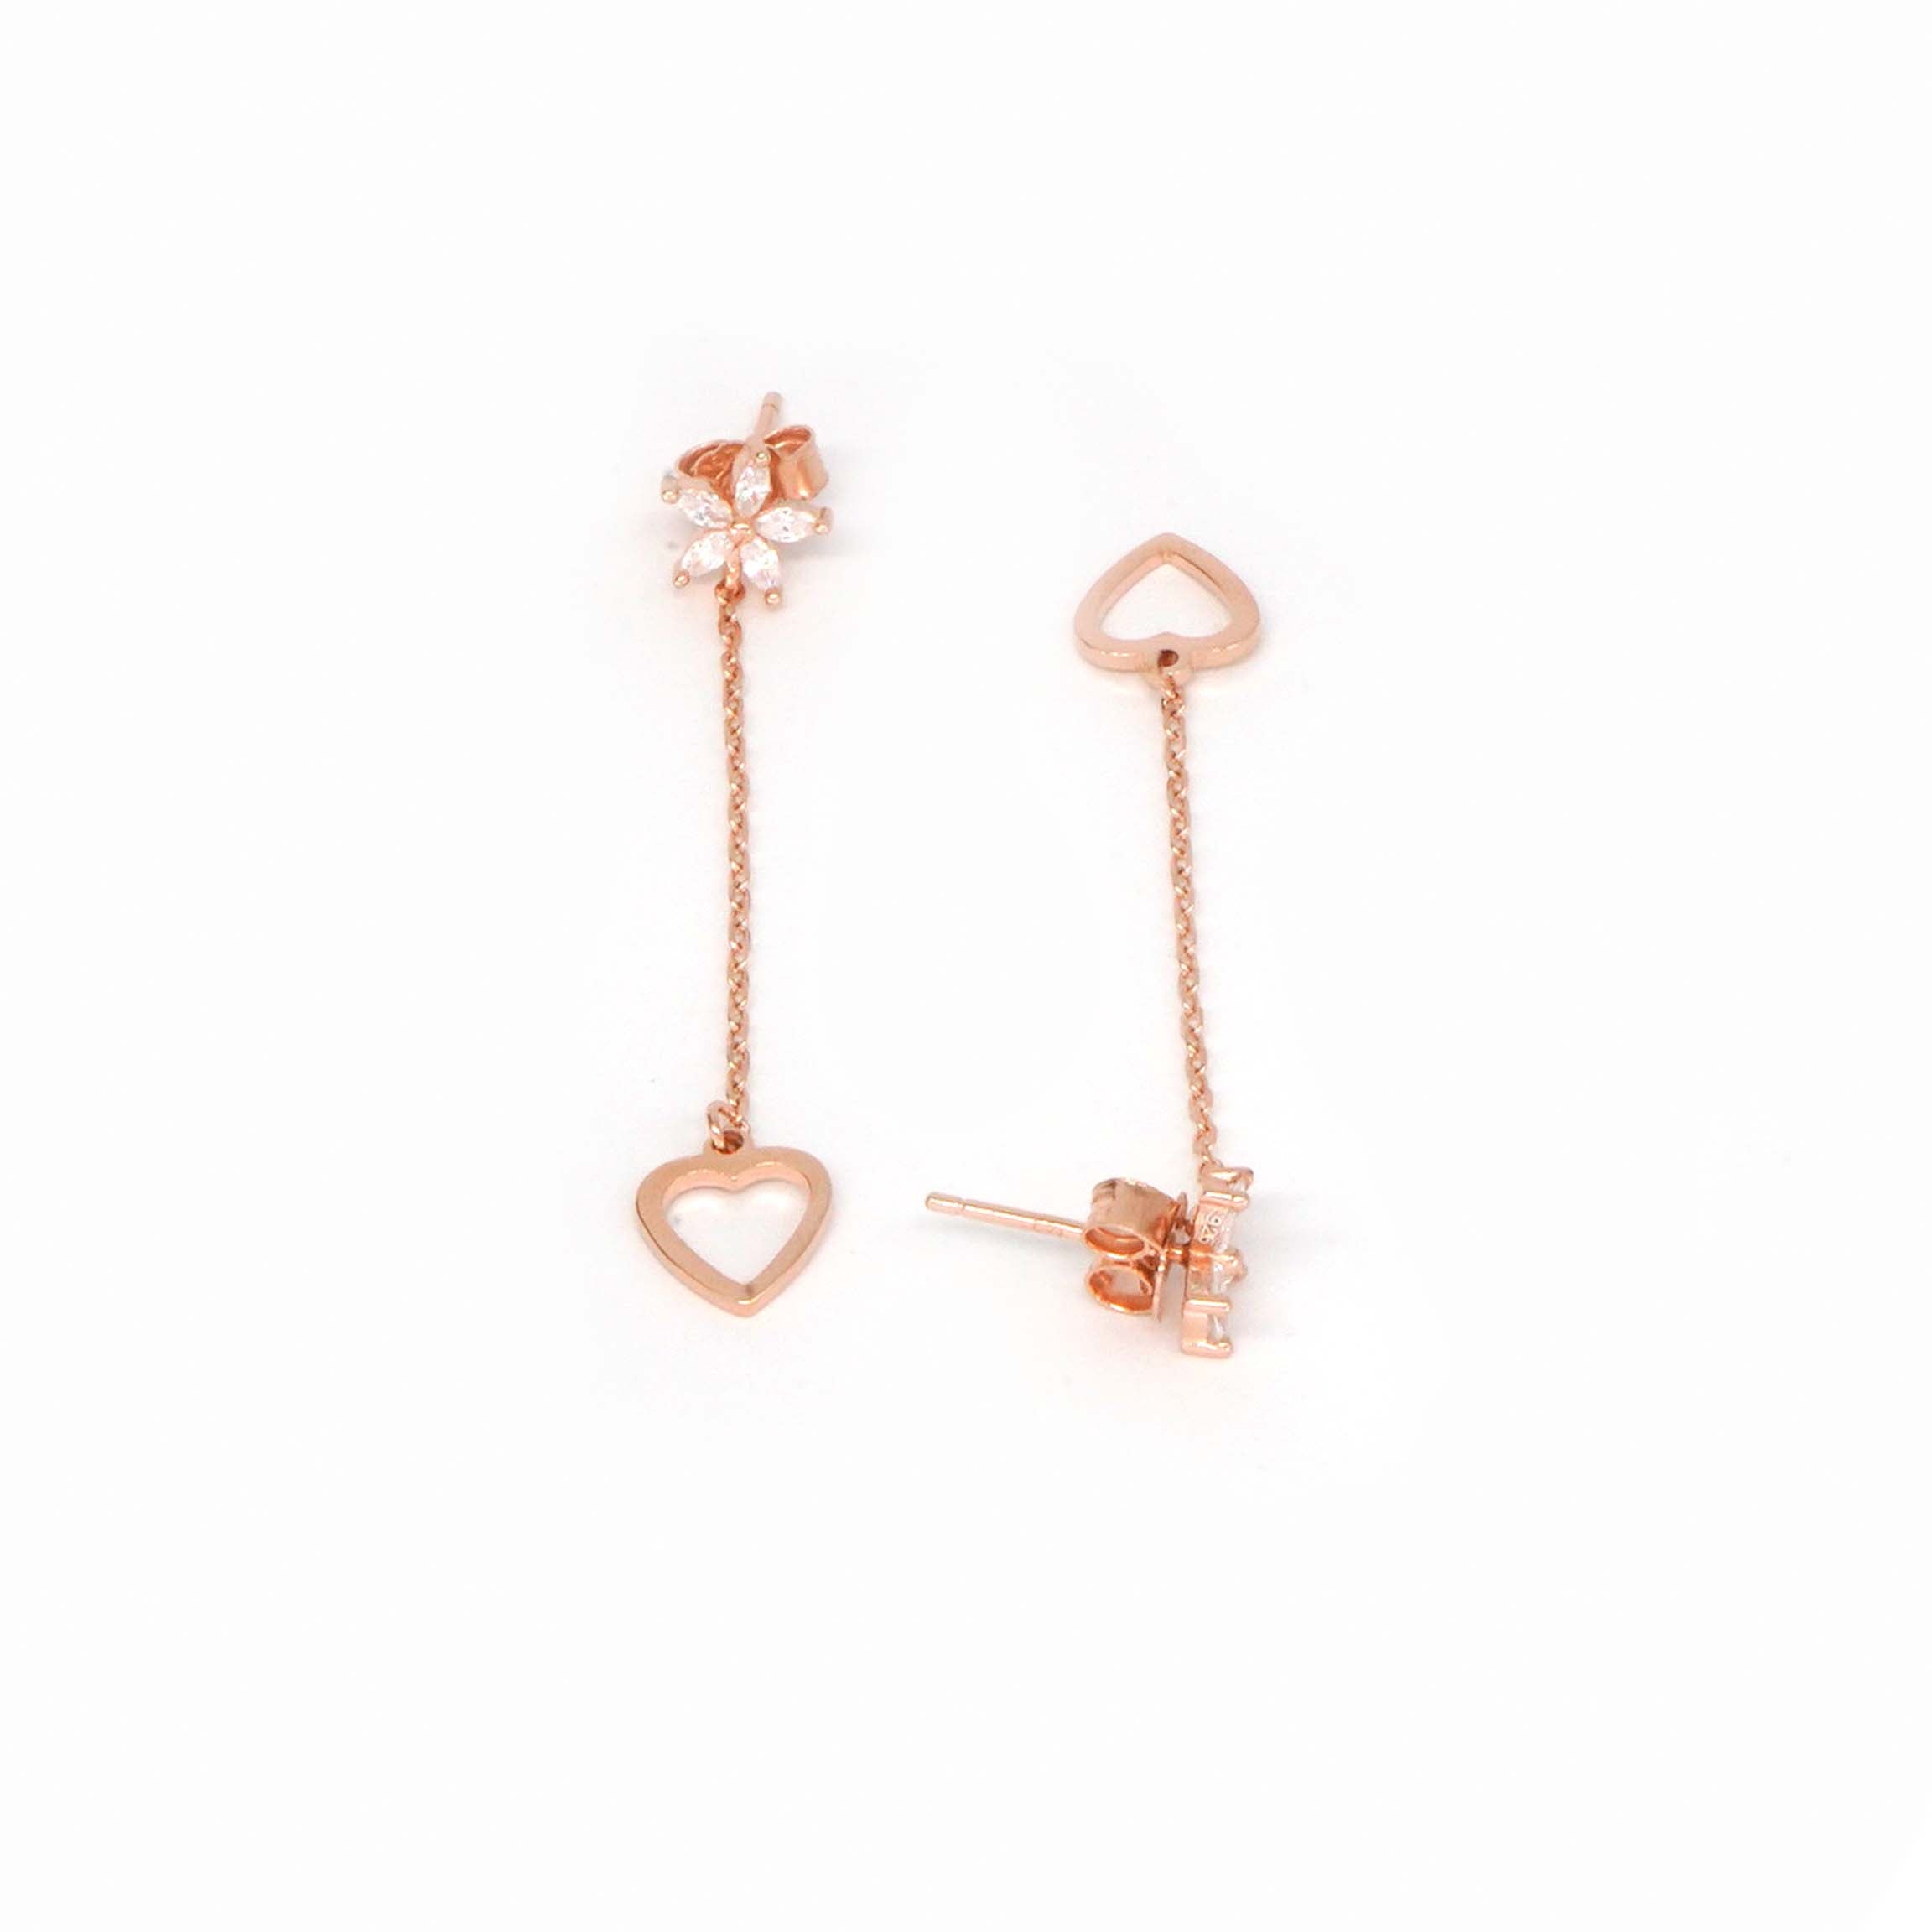 Buy 22K Rose Gold Earrings for Women & Girls Online – Outhouse Jewellery